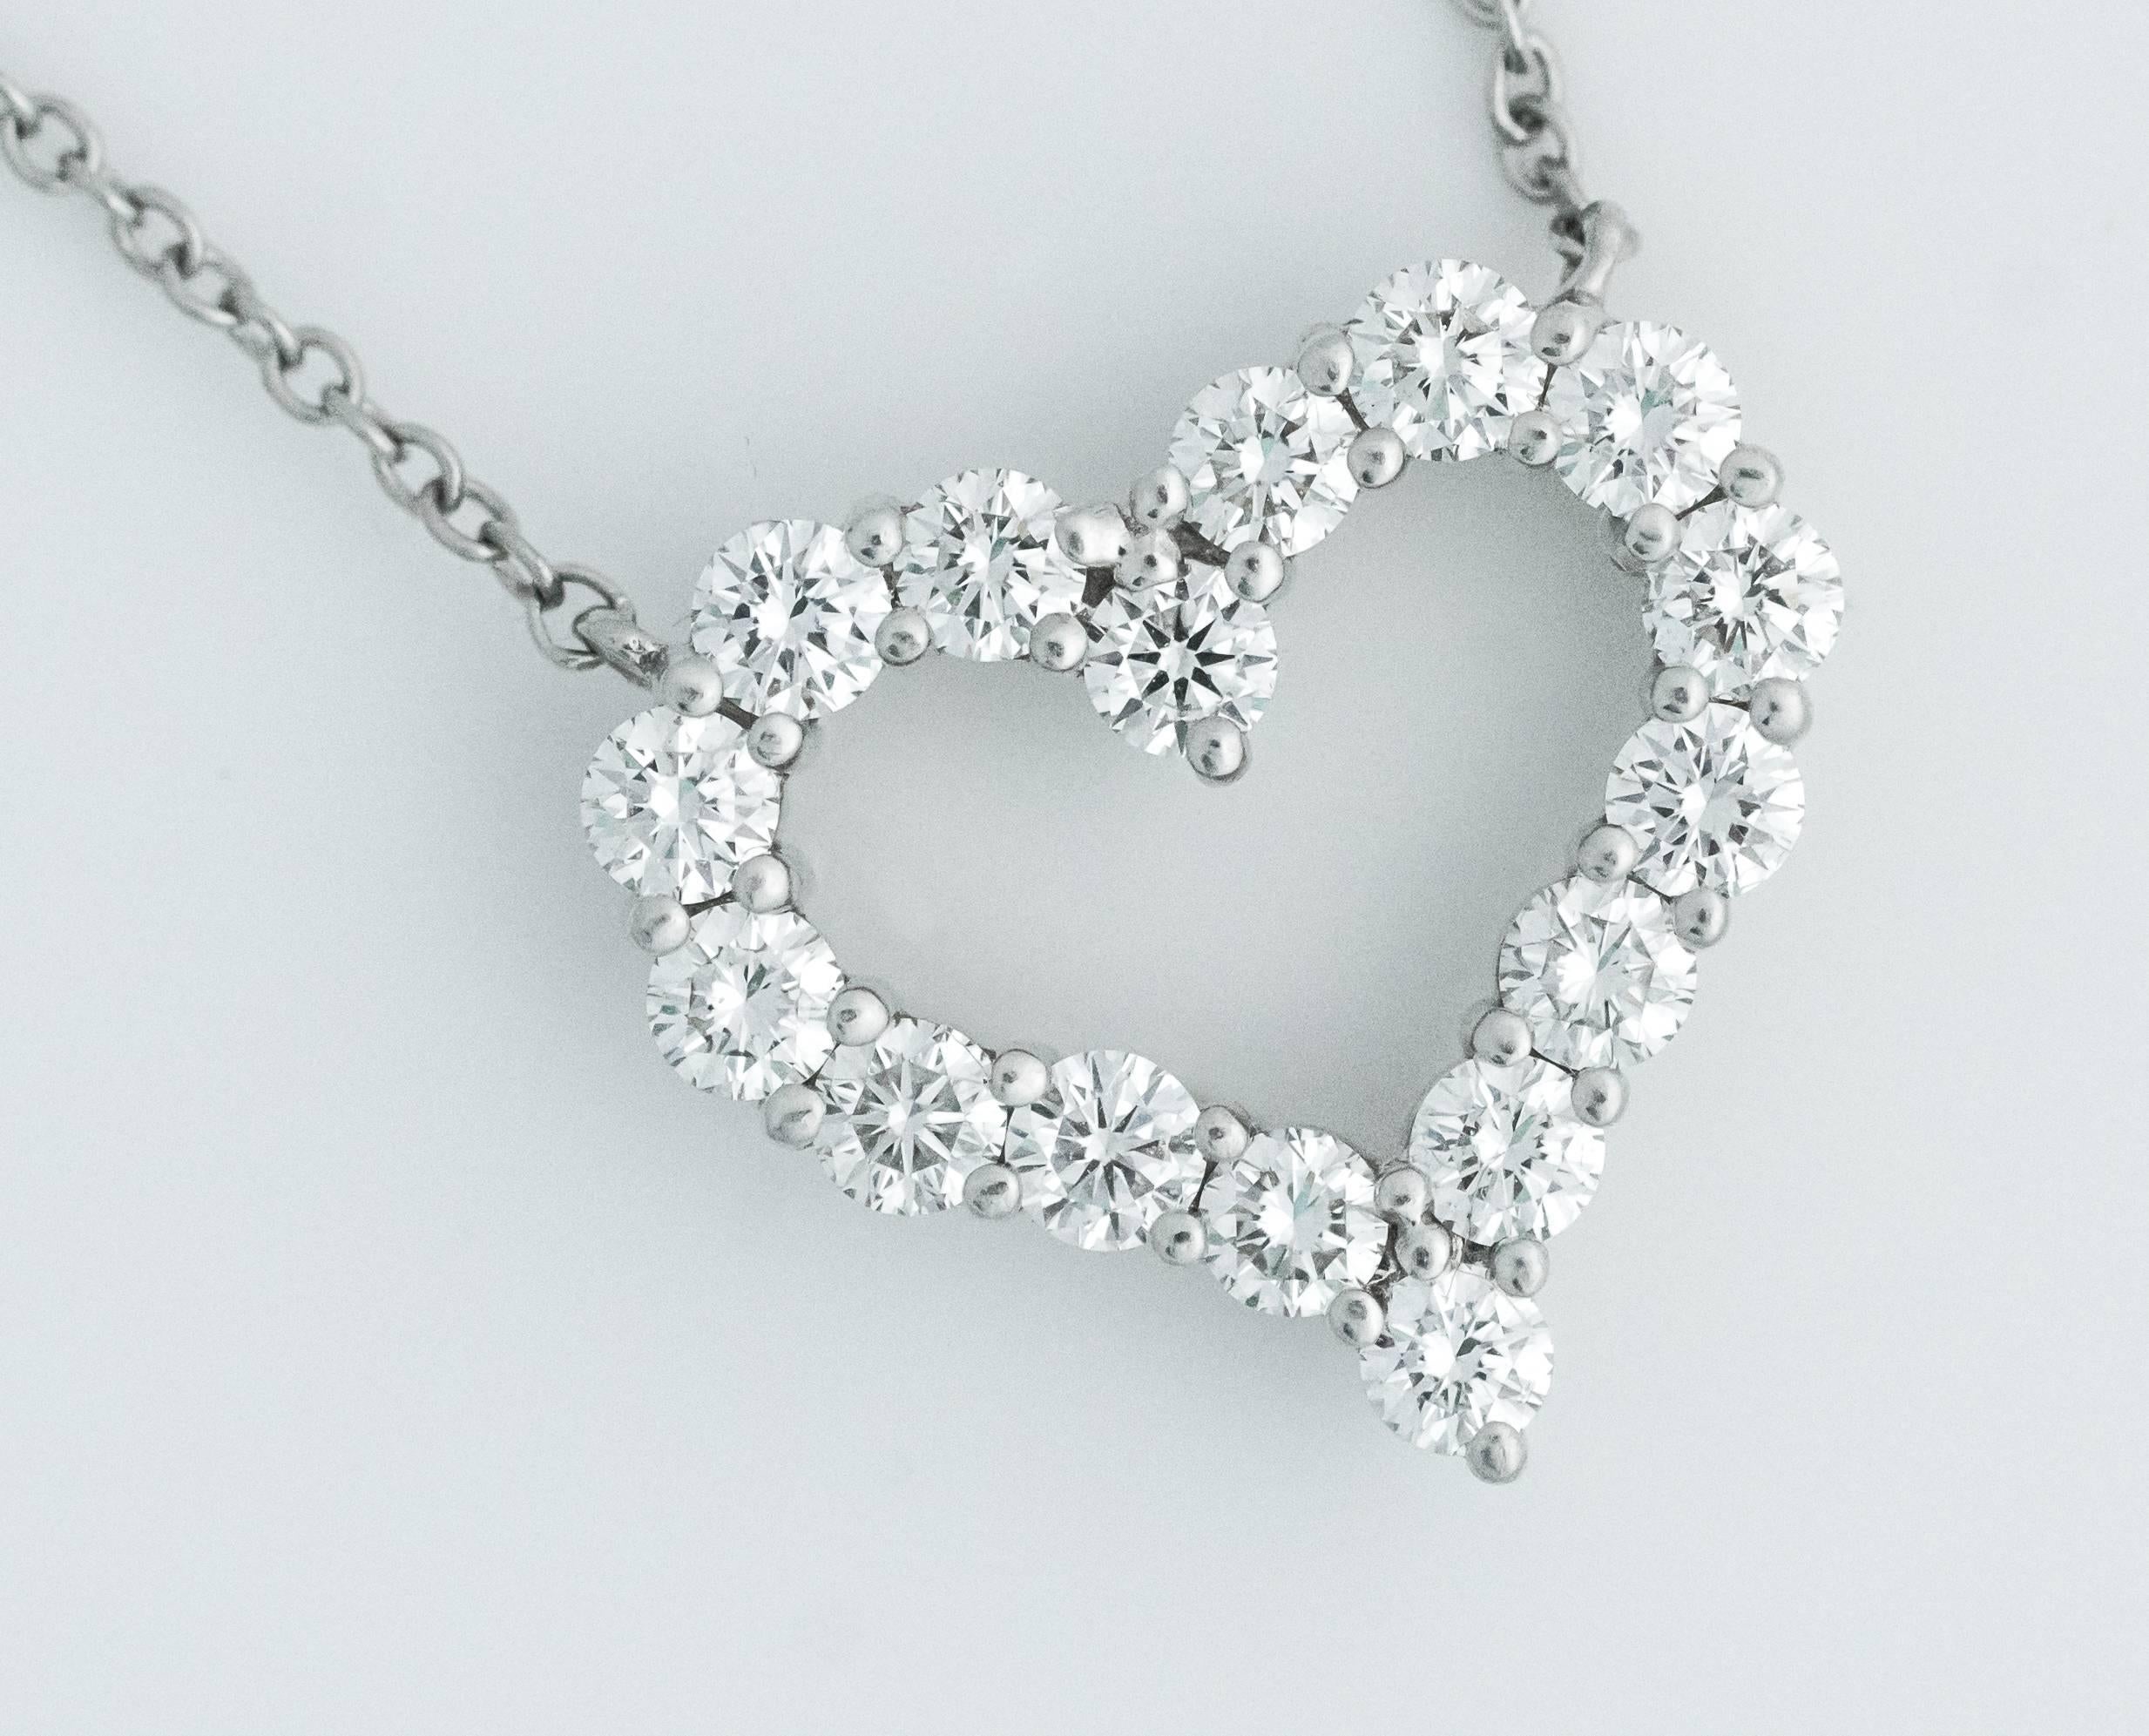 tiffany large diamond heart necklace